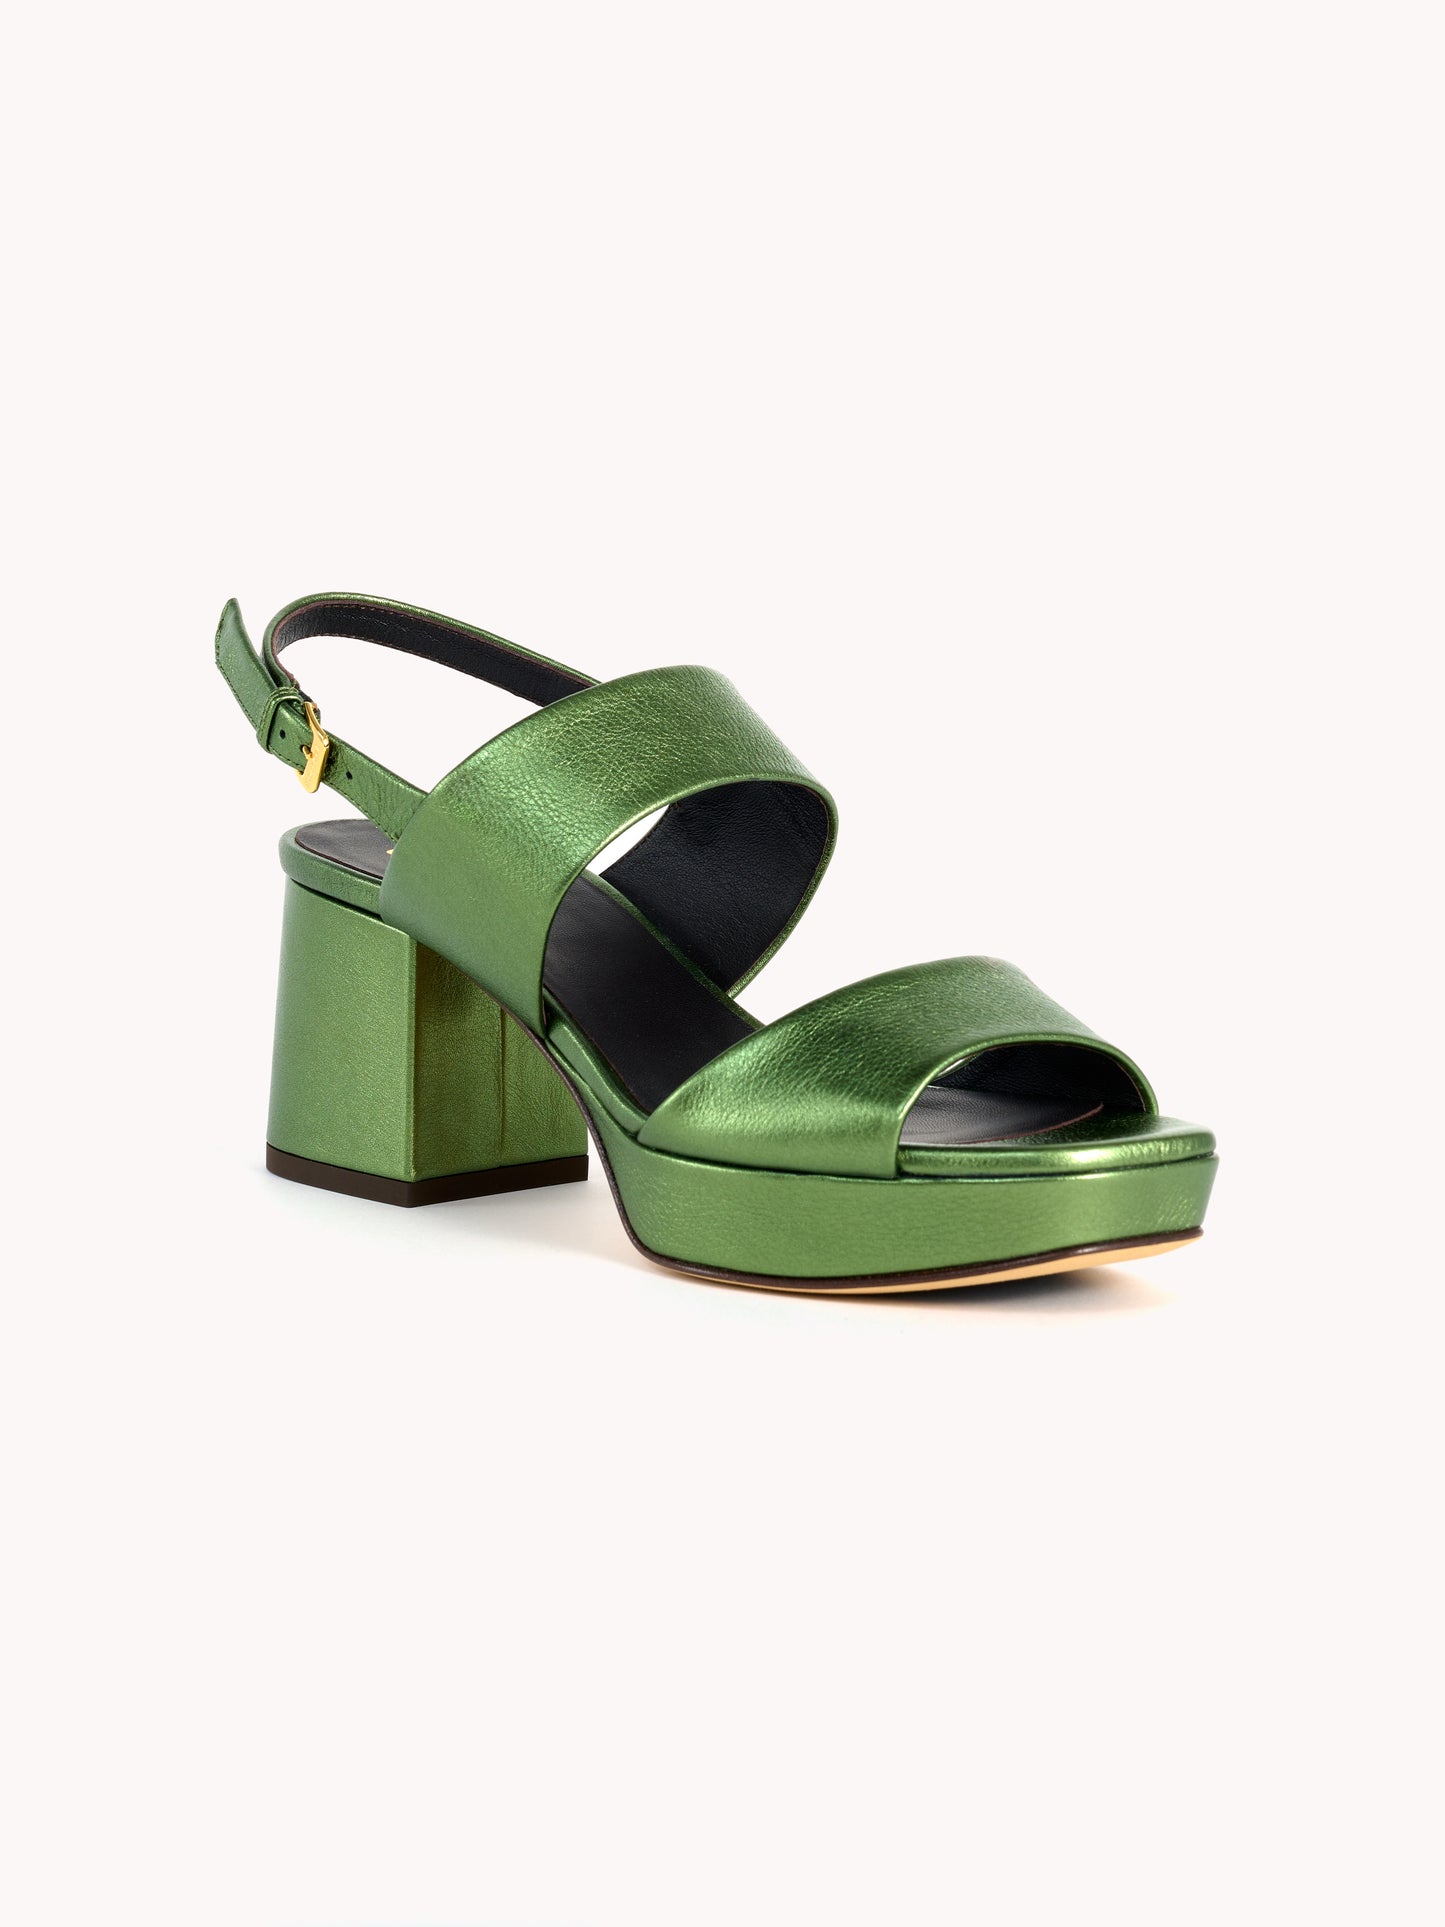 military metallic green sandals effortless chic women skorpios